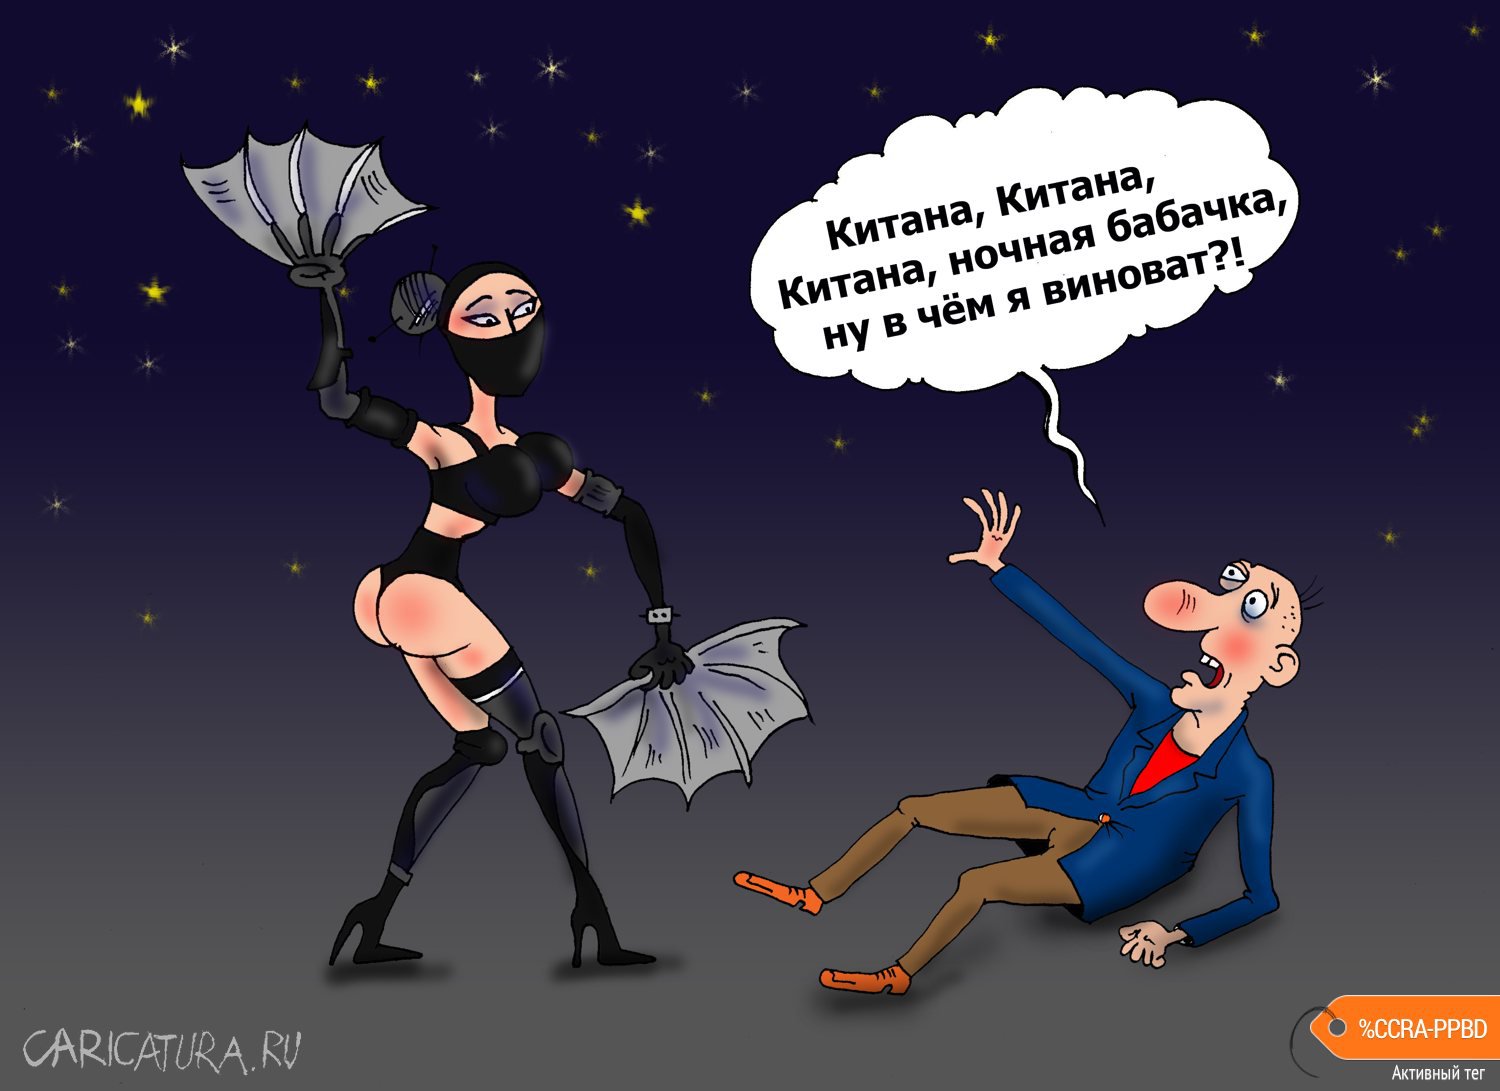 Карикатура "Дежавю", Валерий Тарасенко